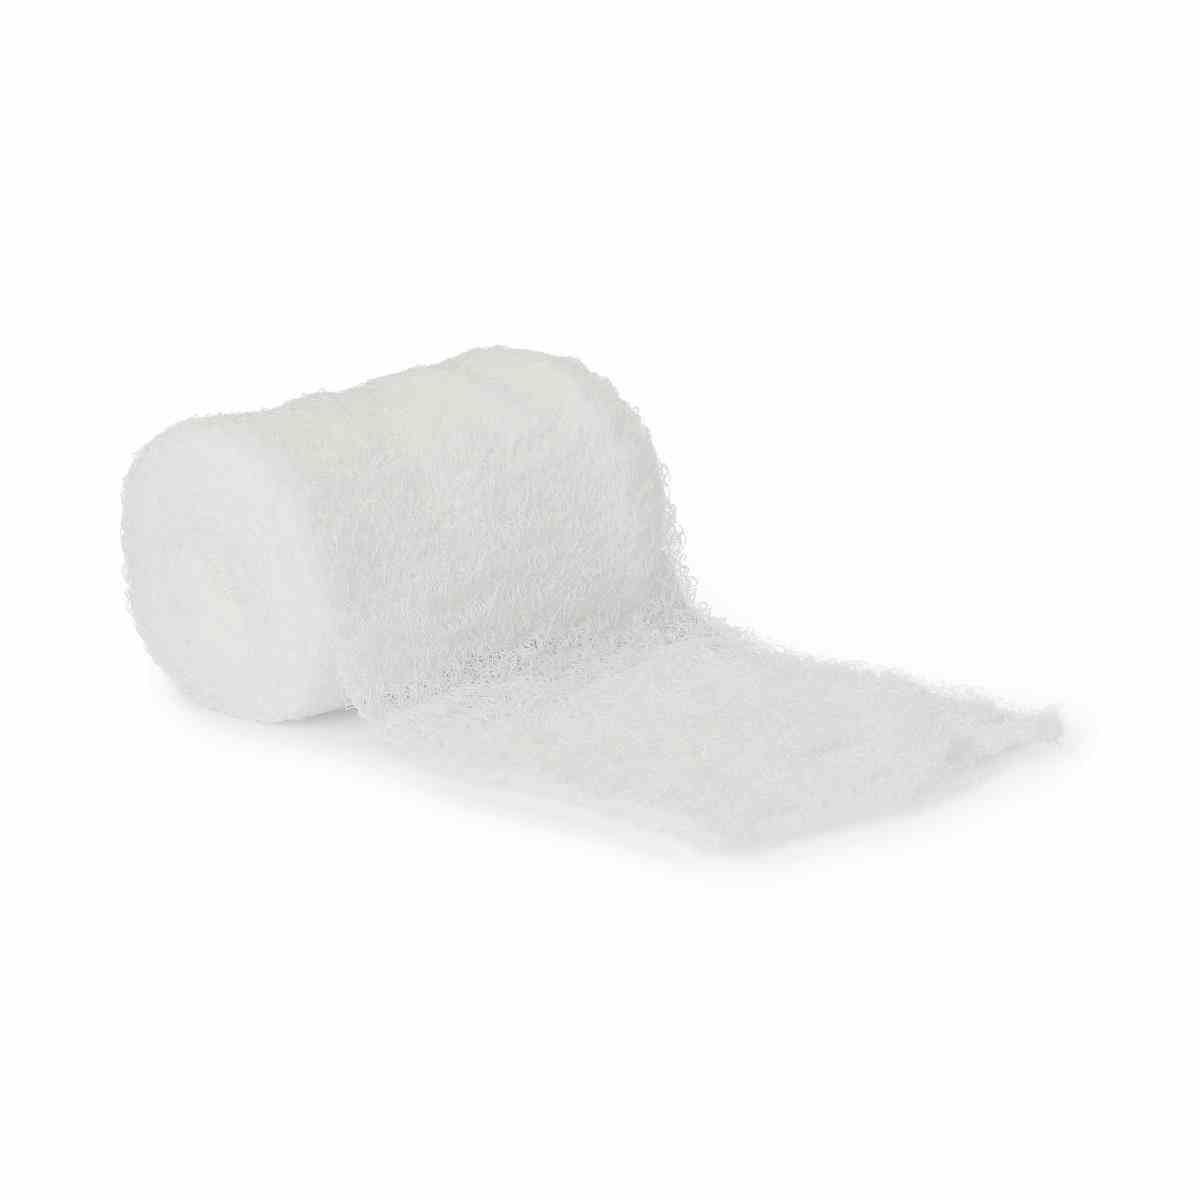 Medline Non-Sterile Cotton Gauze Bandage Rolls, PRM25855, 4 1/2" X 4.1 yd. - Case of 100